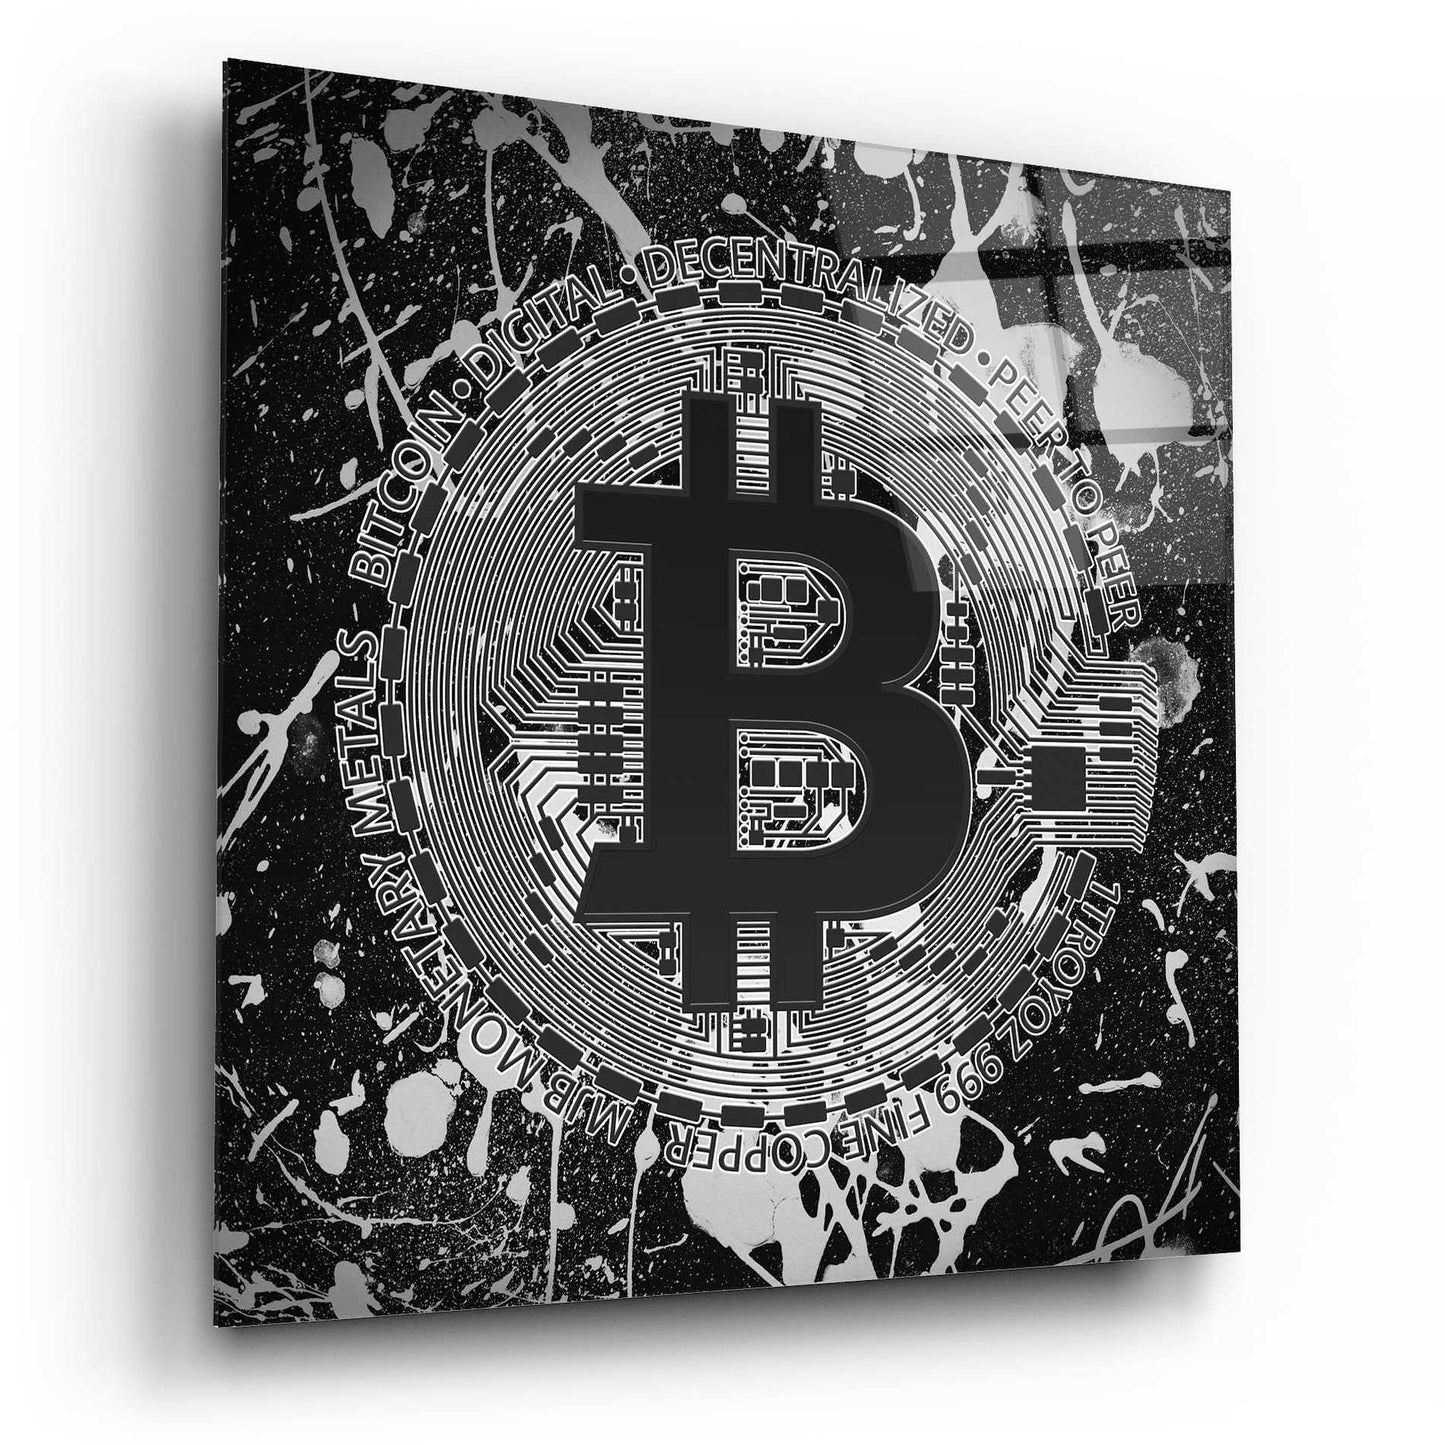 Epic Art 'Bitcoin Black Ice' by Cameron Gray Acrylic Glass Wall Art,12x12